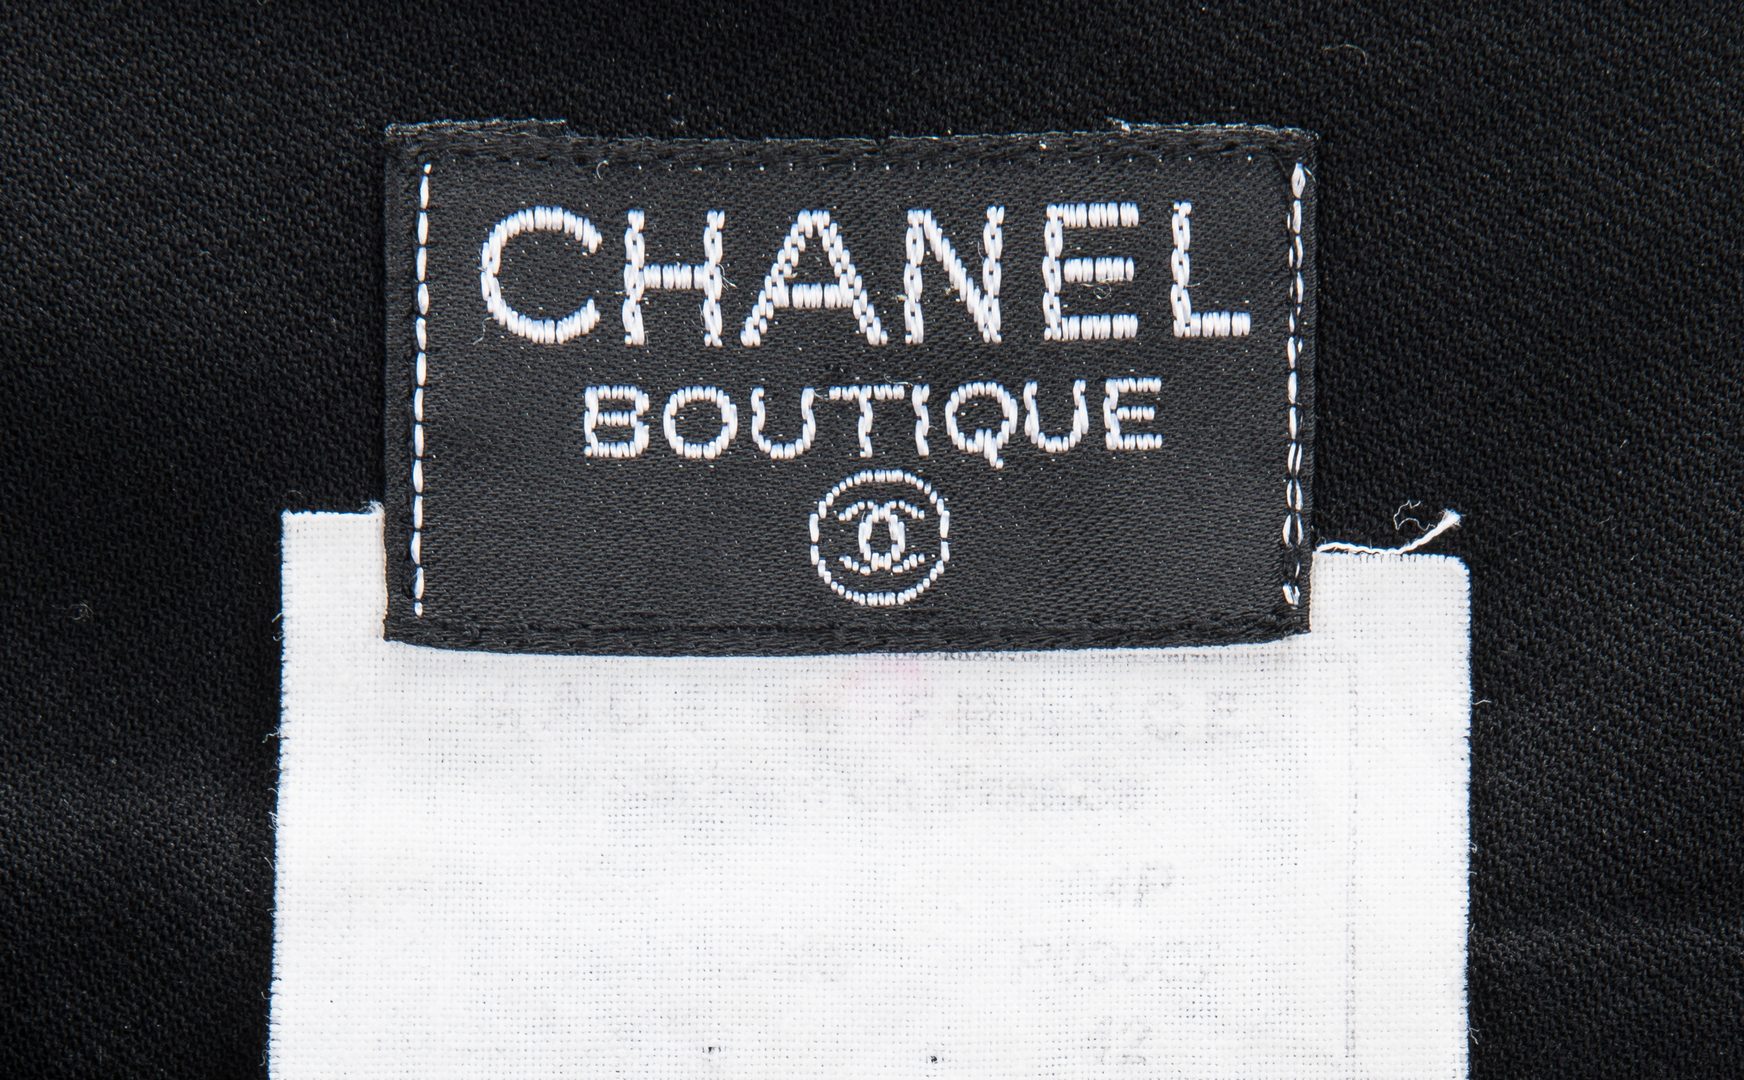 Lot 748: 4 Vintage Chanel Fashion Items